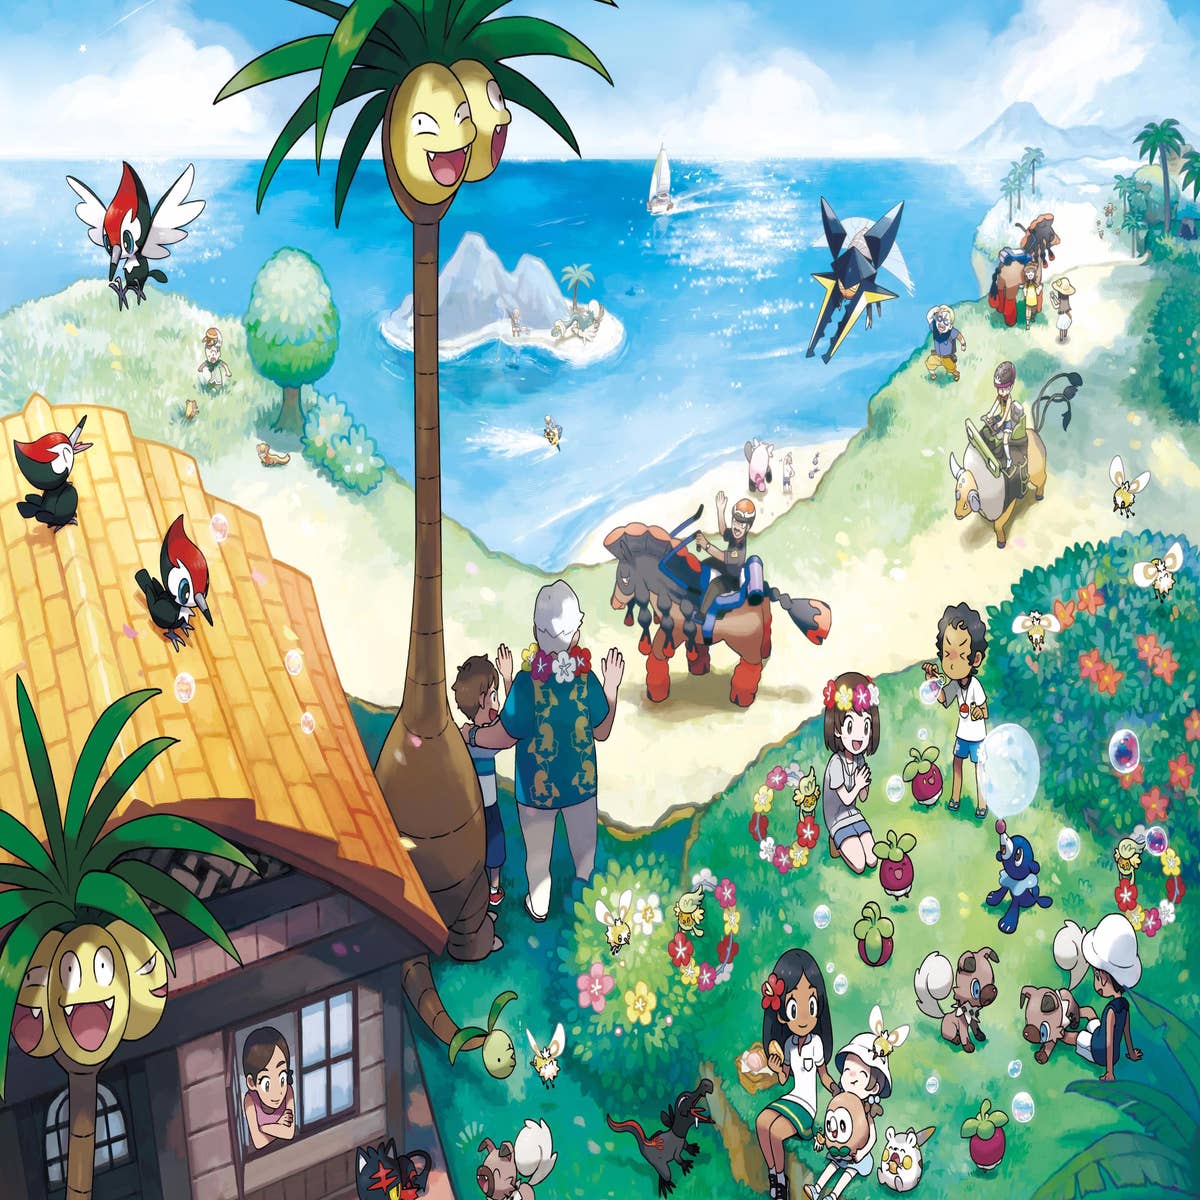 Pokémon Alola Region Adventure Guide with Poster